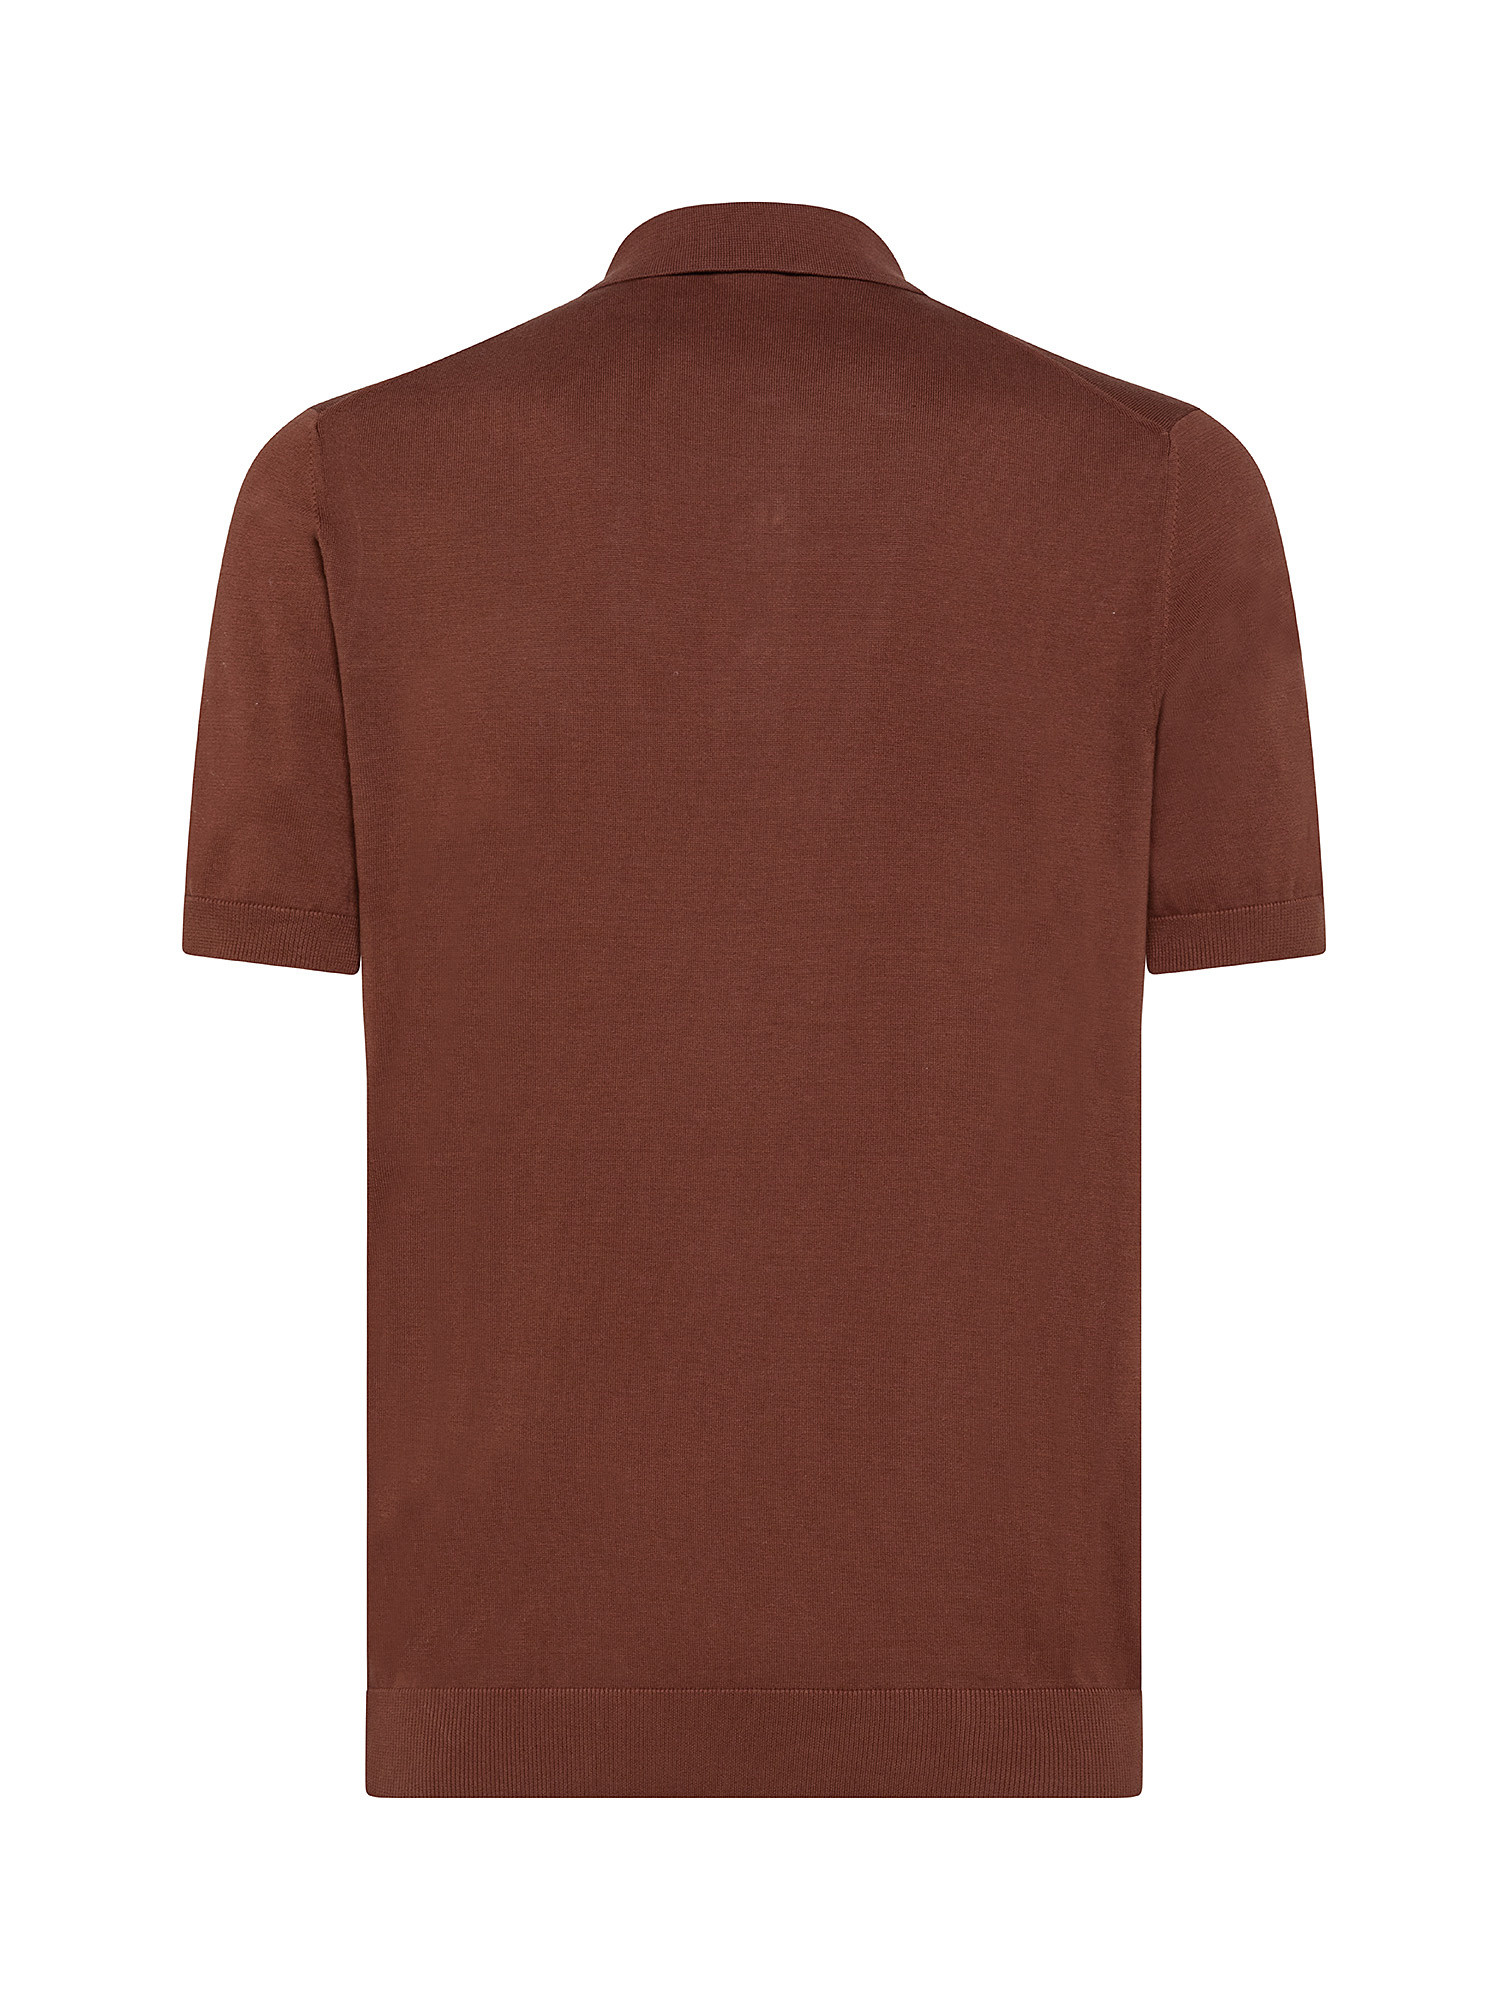 Cotton knit polo shirt, Hazelnut Brown, large image number 1